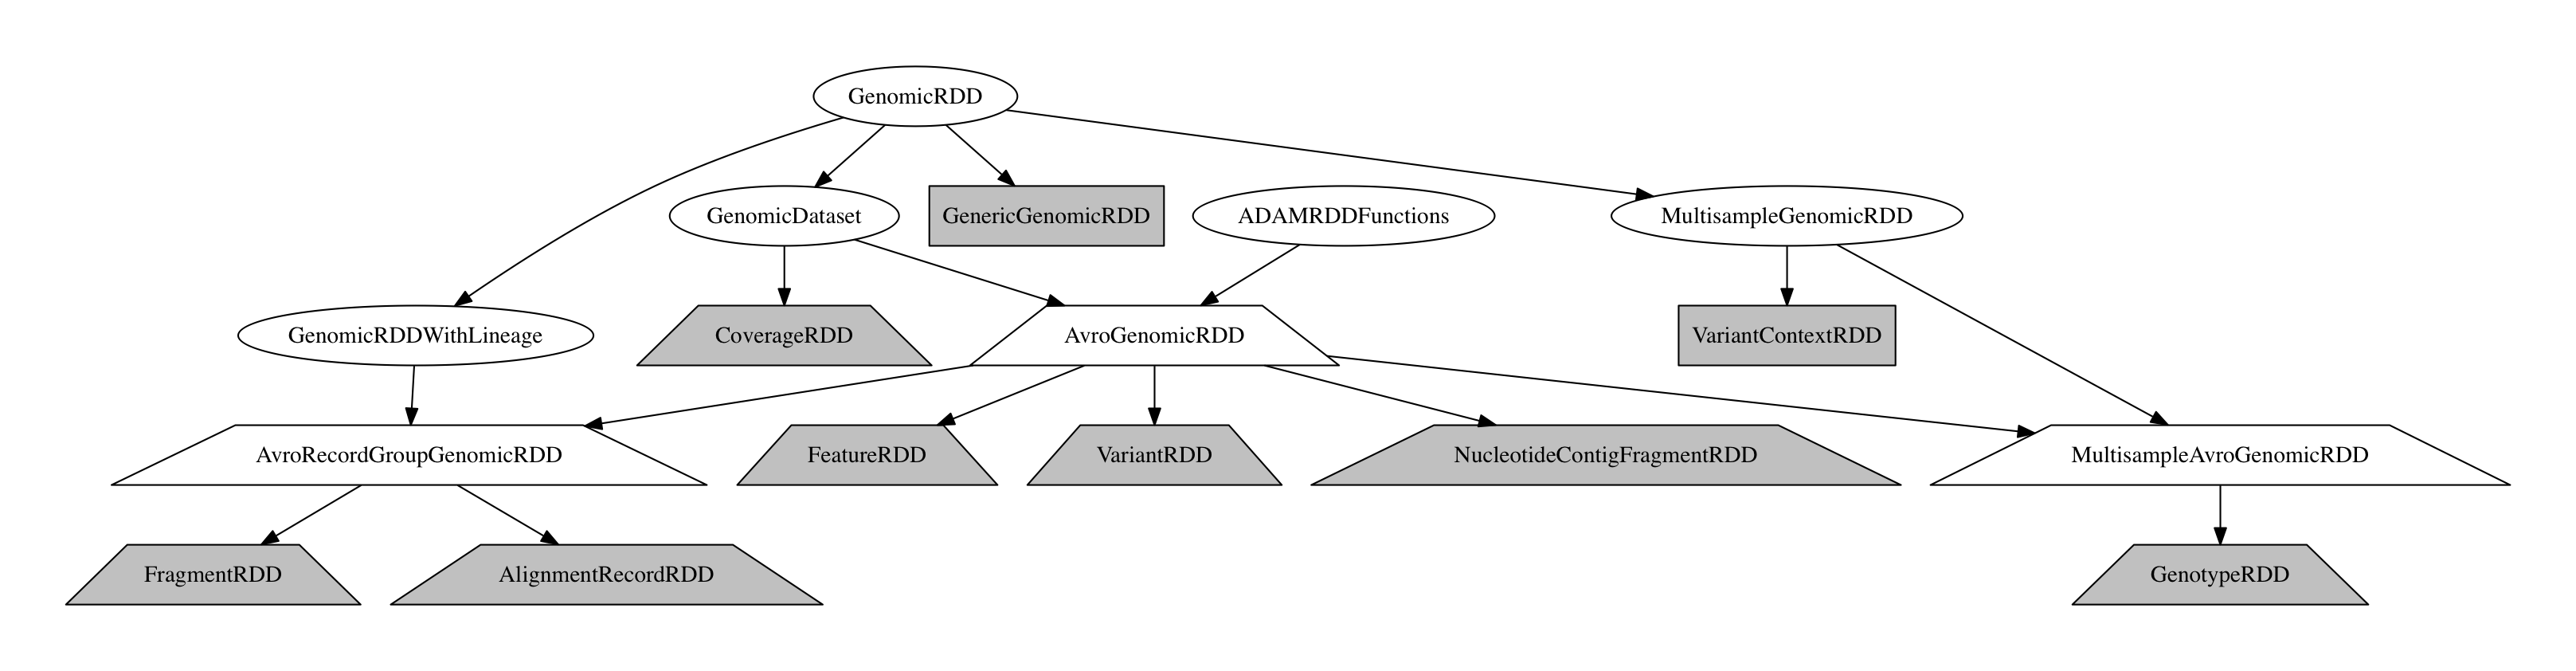 The GenomicRDD Class Hierarchy